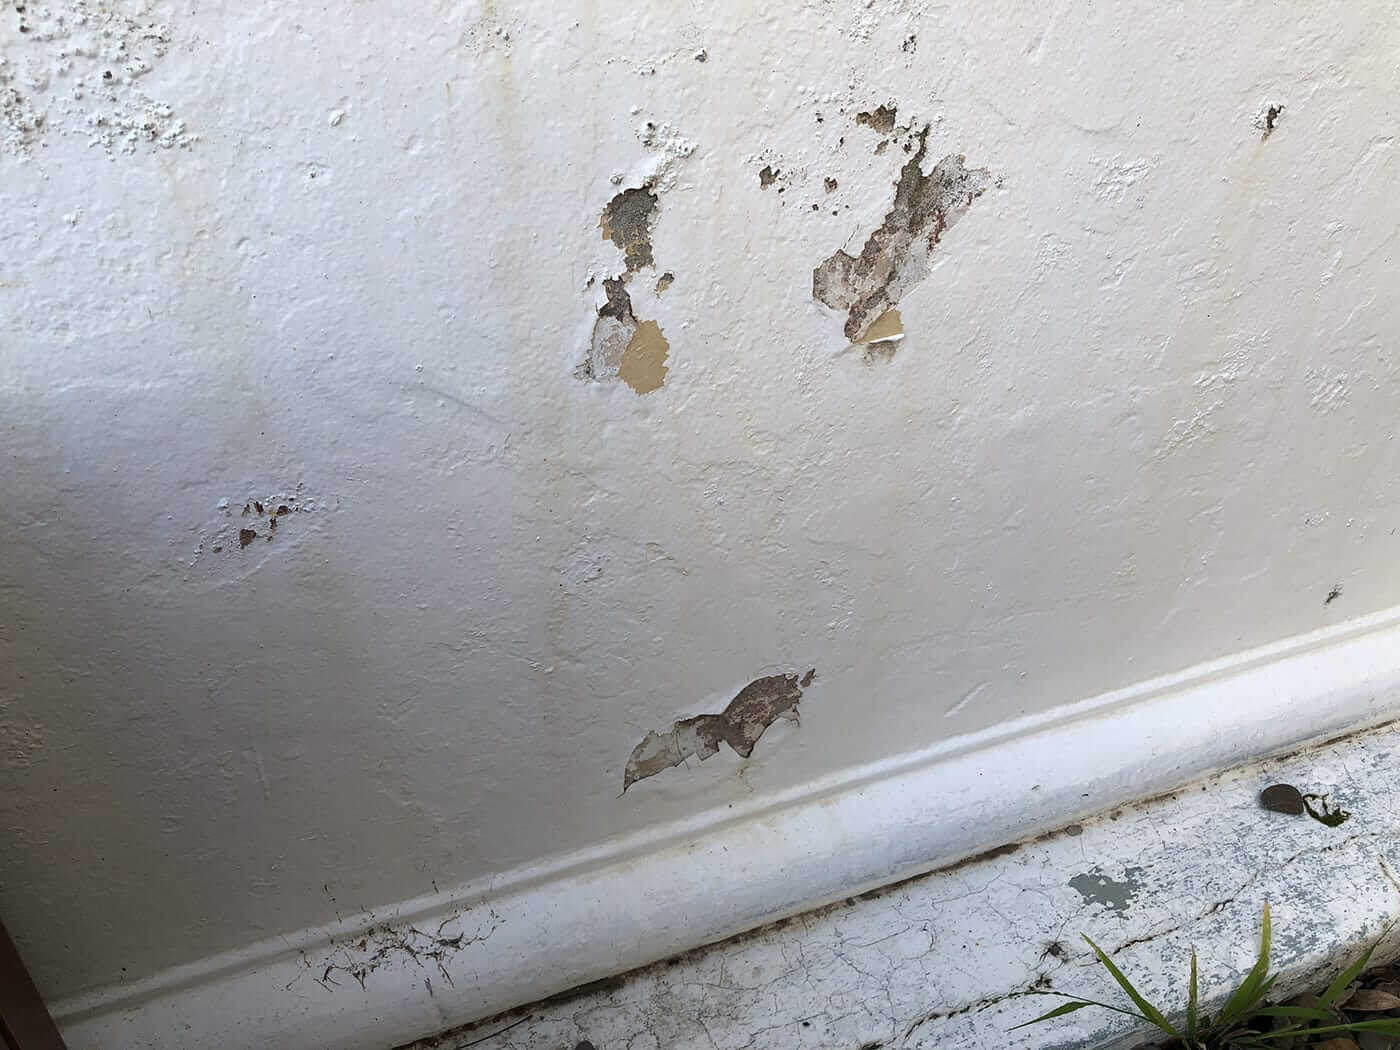 Peeling lead paint on a wall.